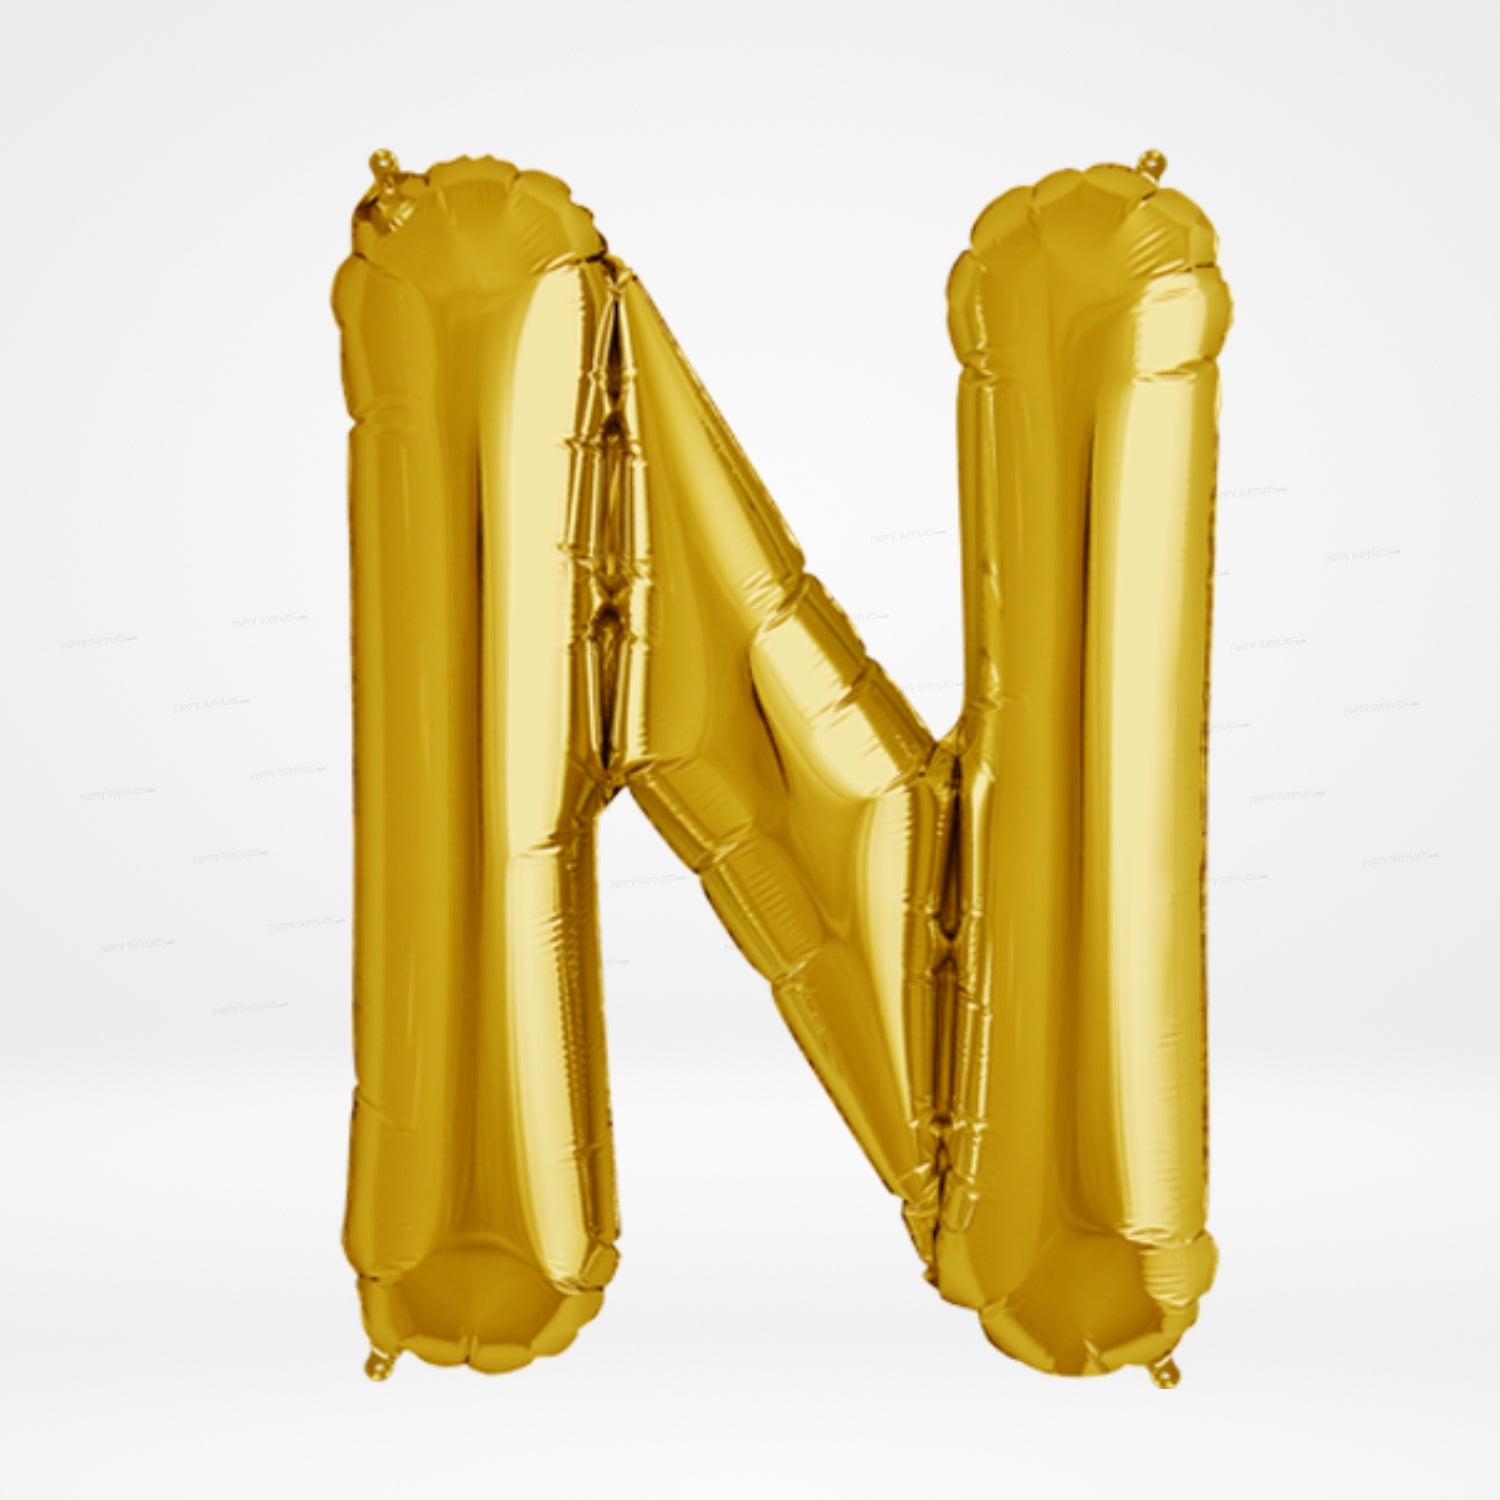 Alphabet N Premium Gold Foil Balloon